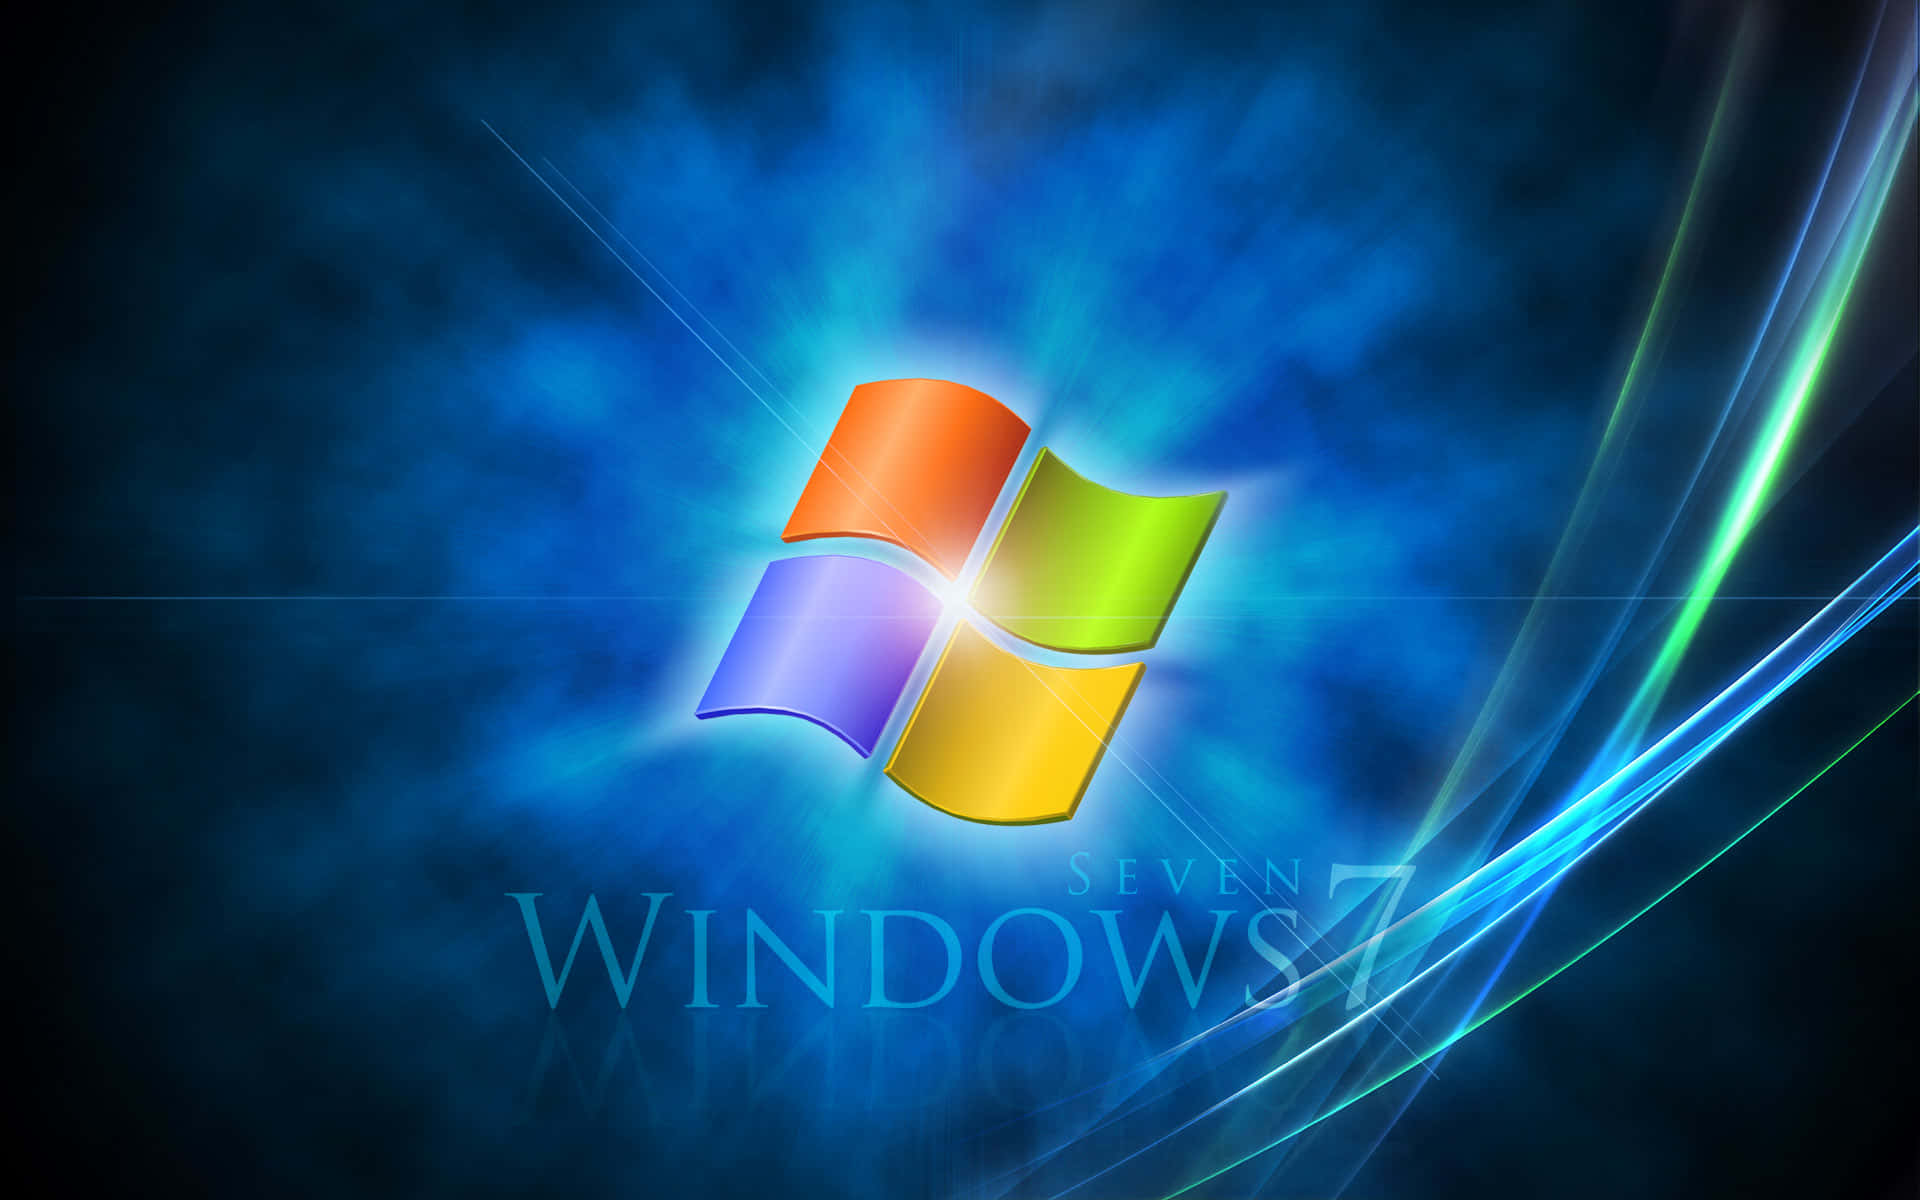 Sfondodi Windows 7